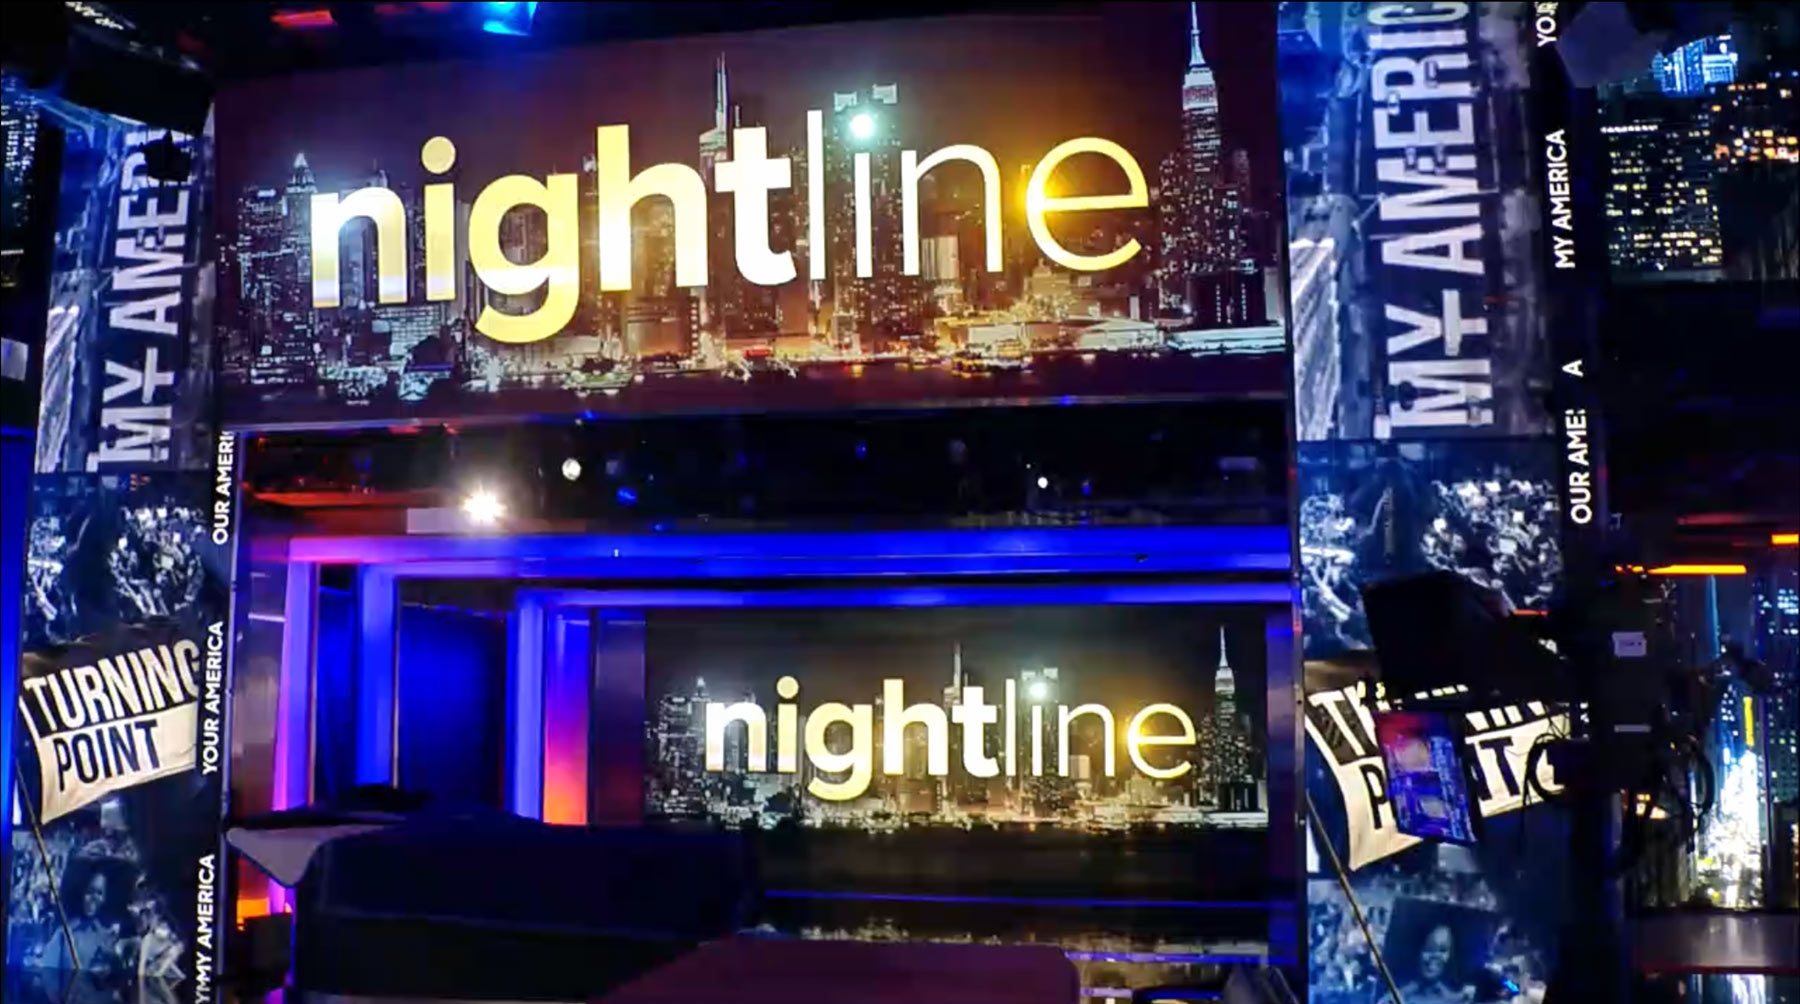 World News Tonight & Nightline set screen design K Brandon Bell